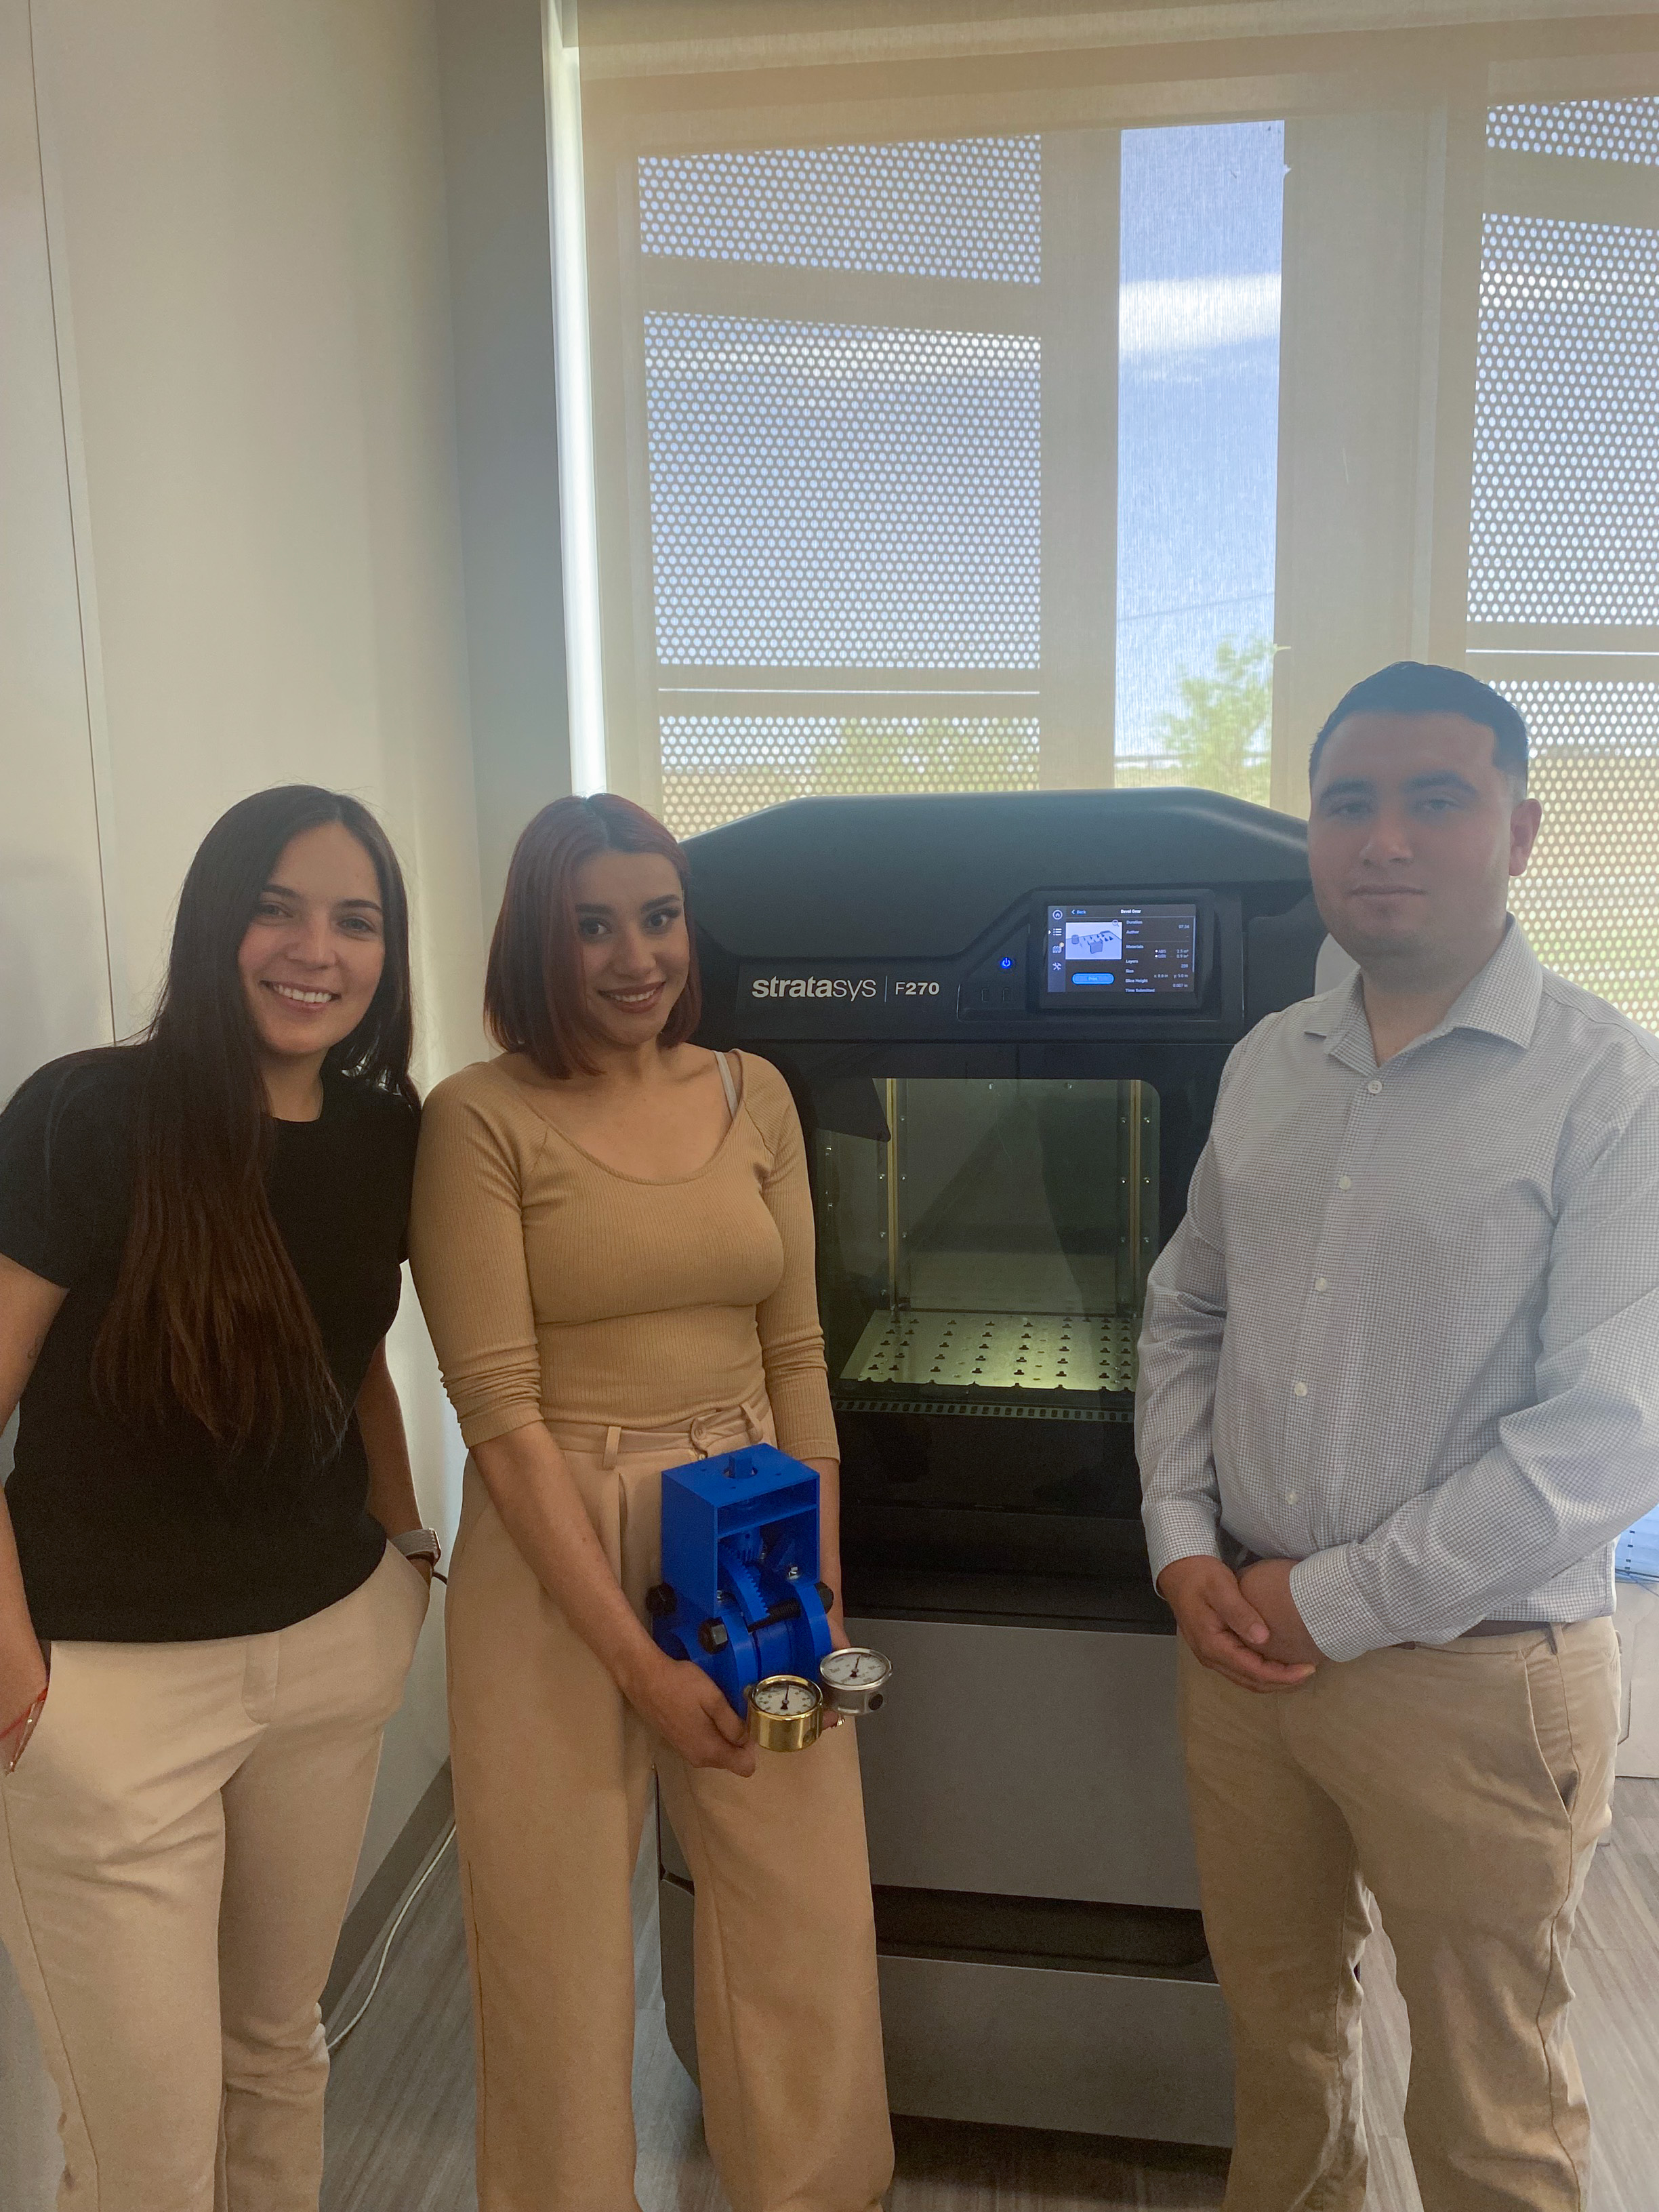 Mechanical engineering students Marian, Maribel, and Esteban with 3D printer